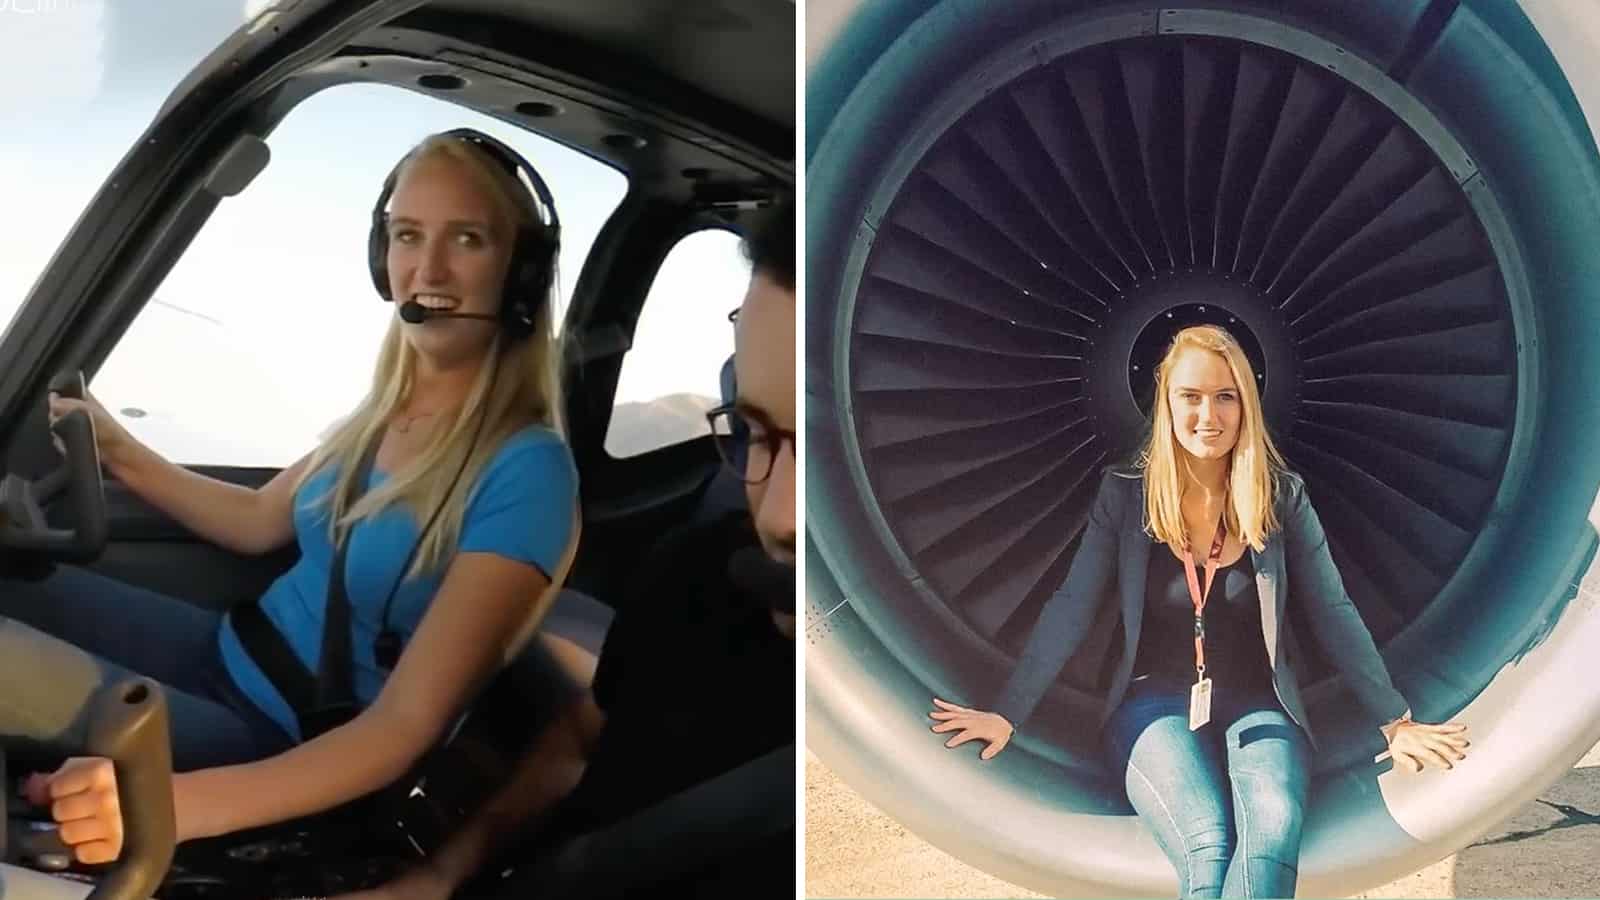 Female Airline Pilot Explains How She Pursued Her Dreams